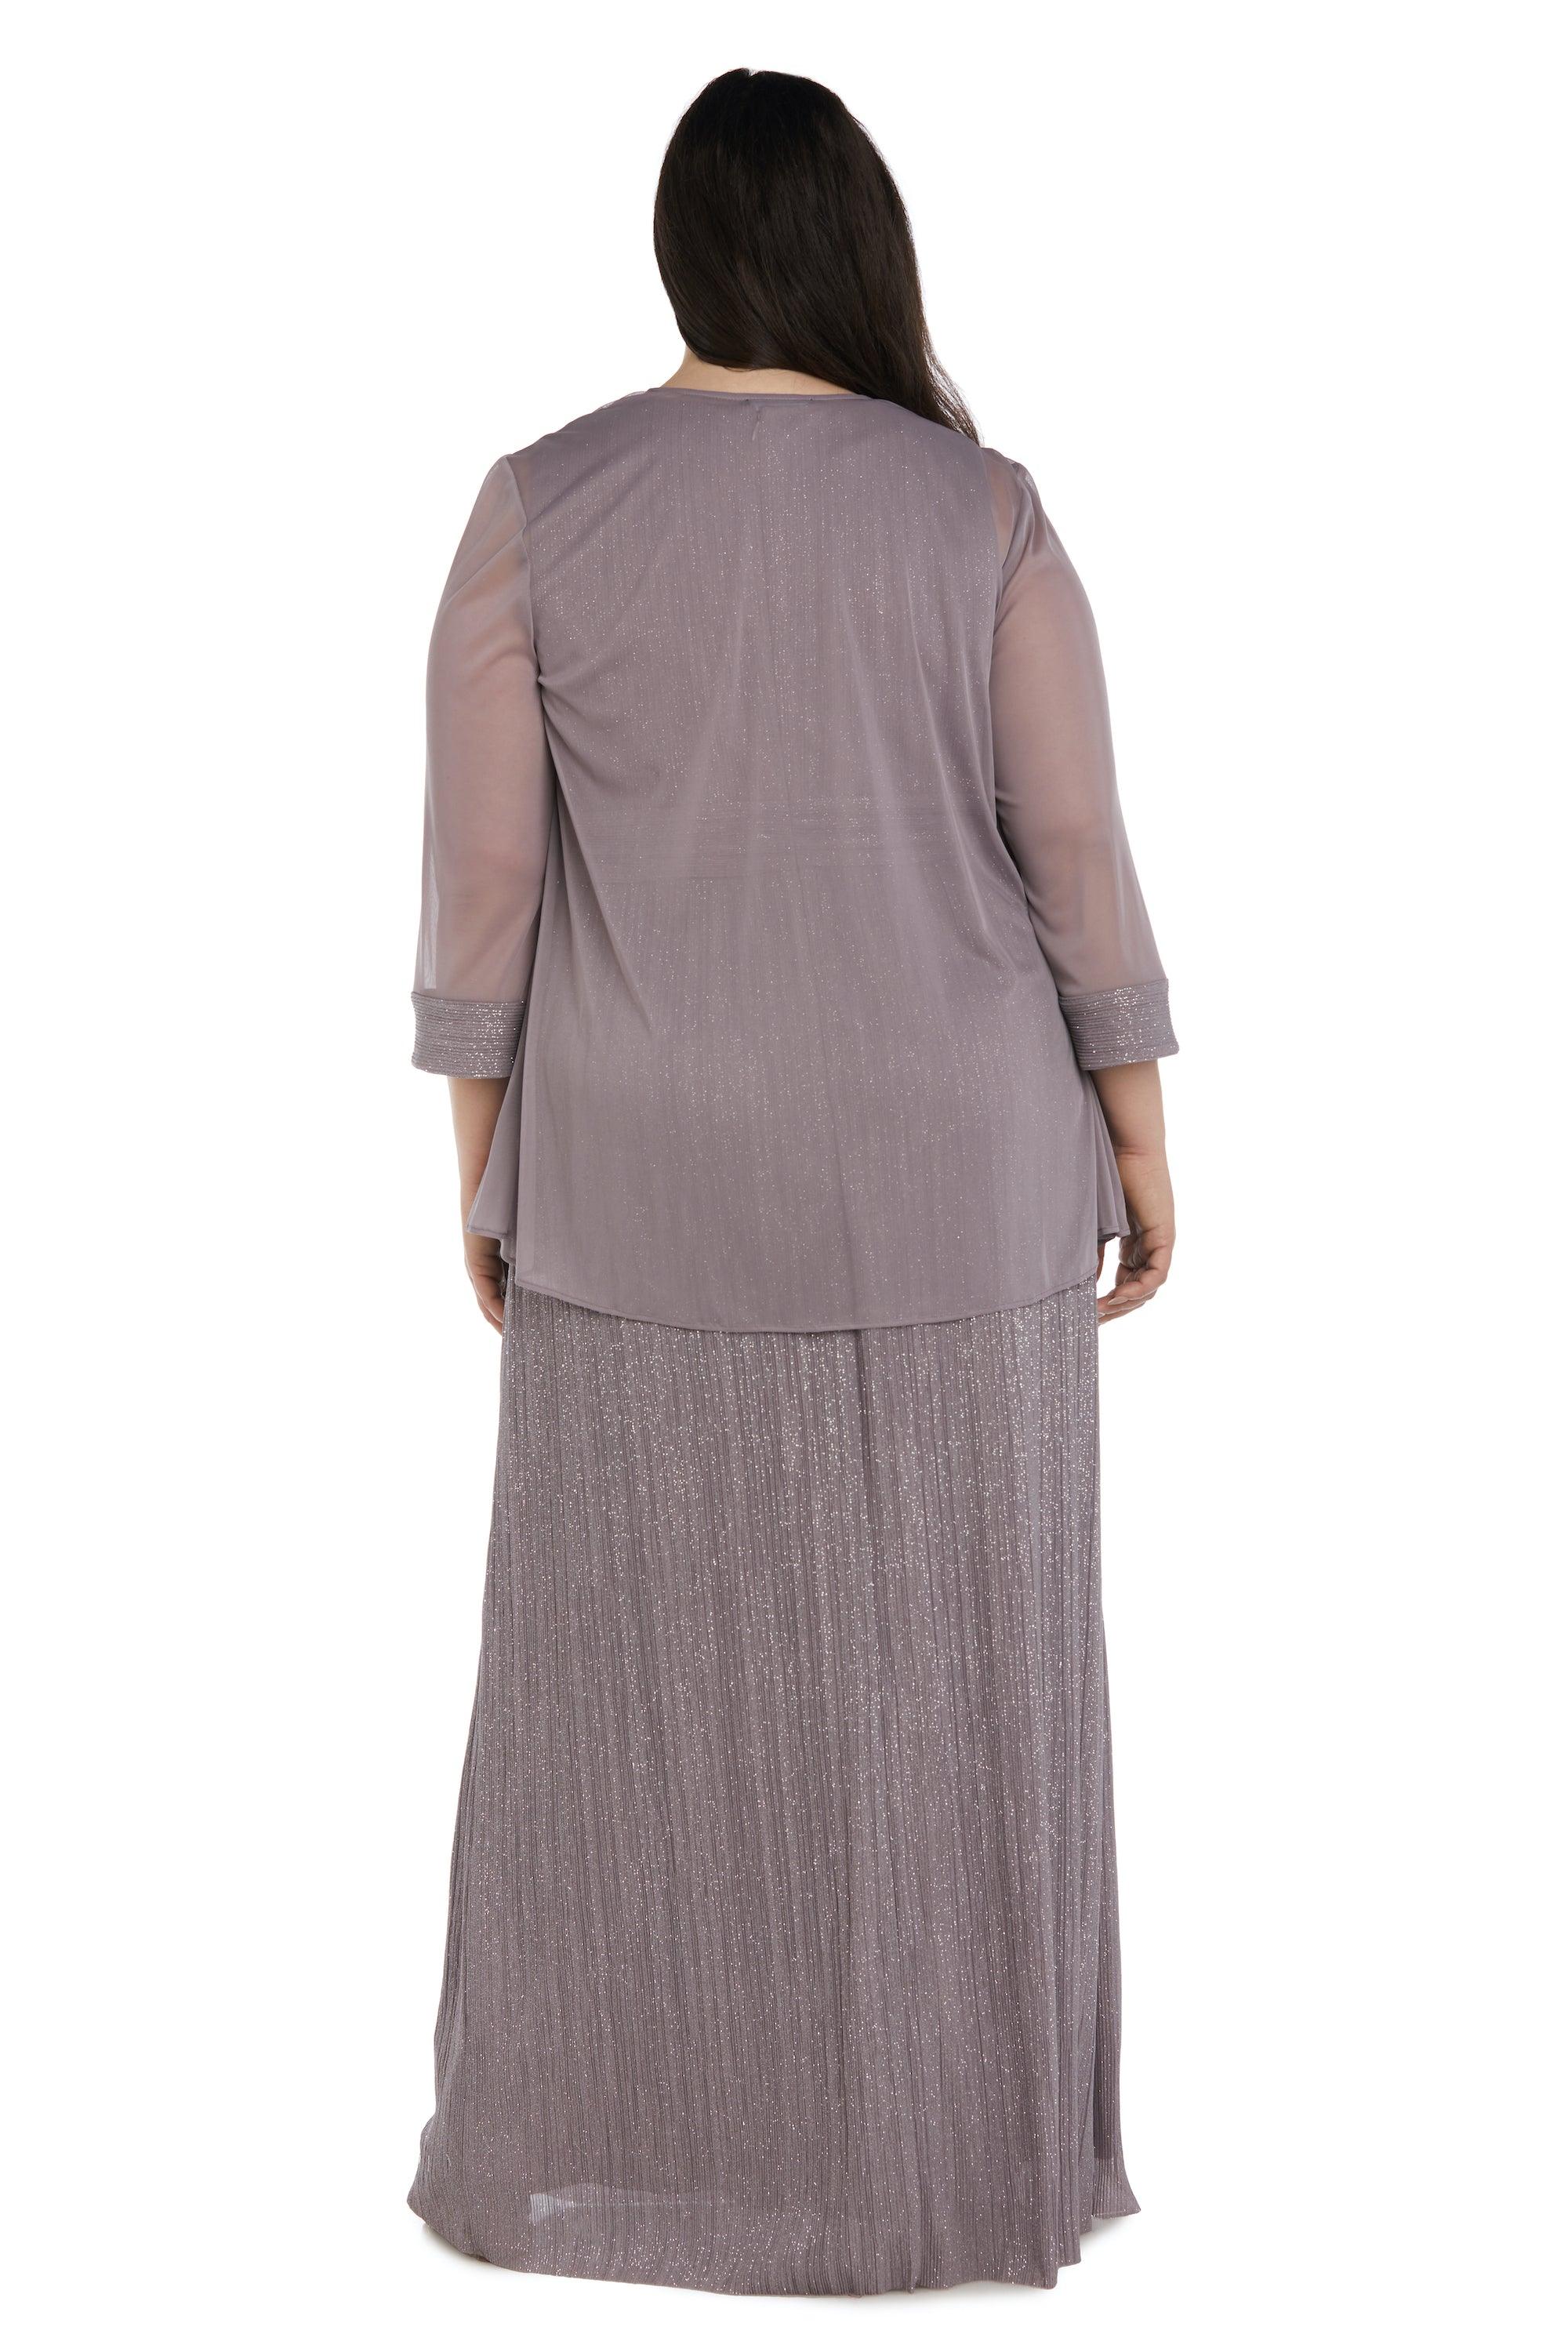 R&M Richards Long Plus Size Formal Dress 2475W - The Dress Outlet